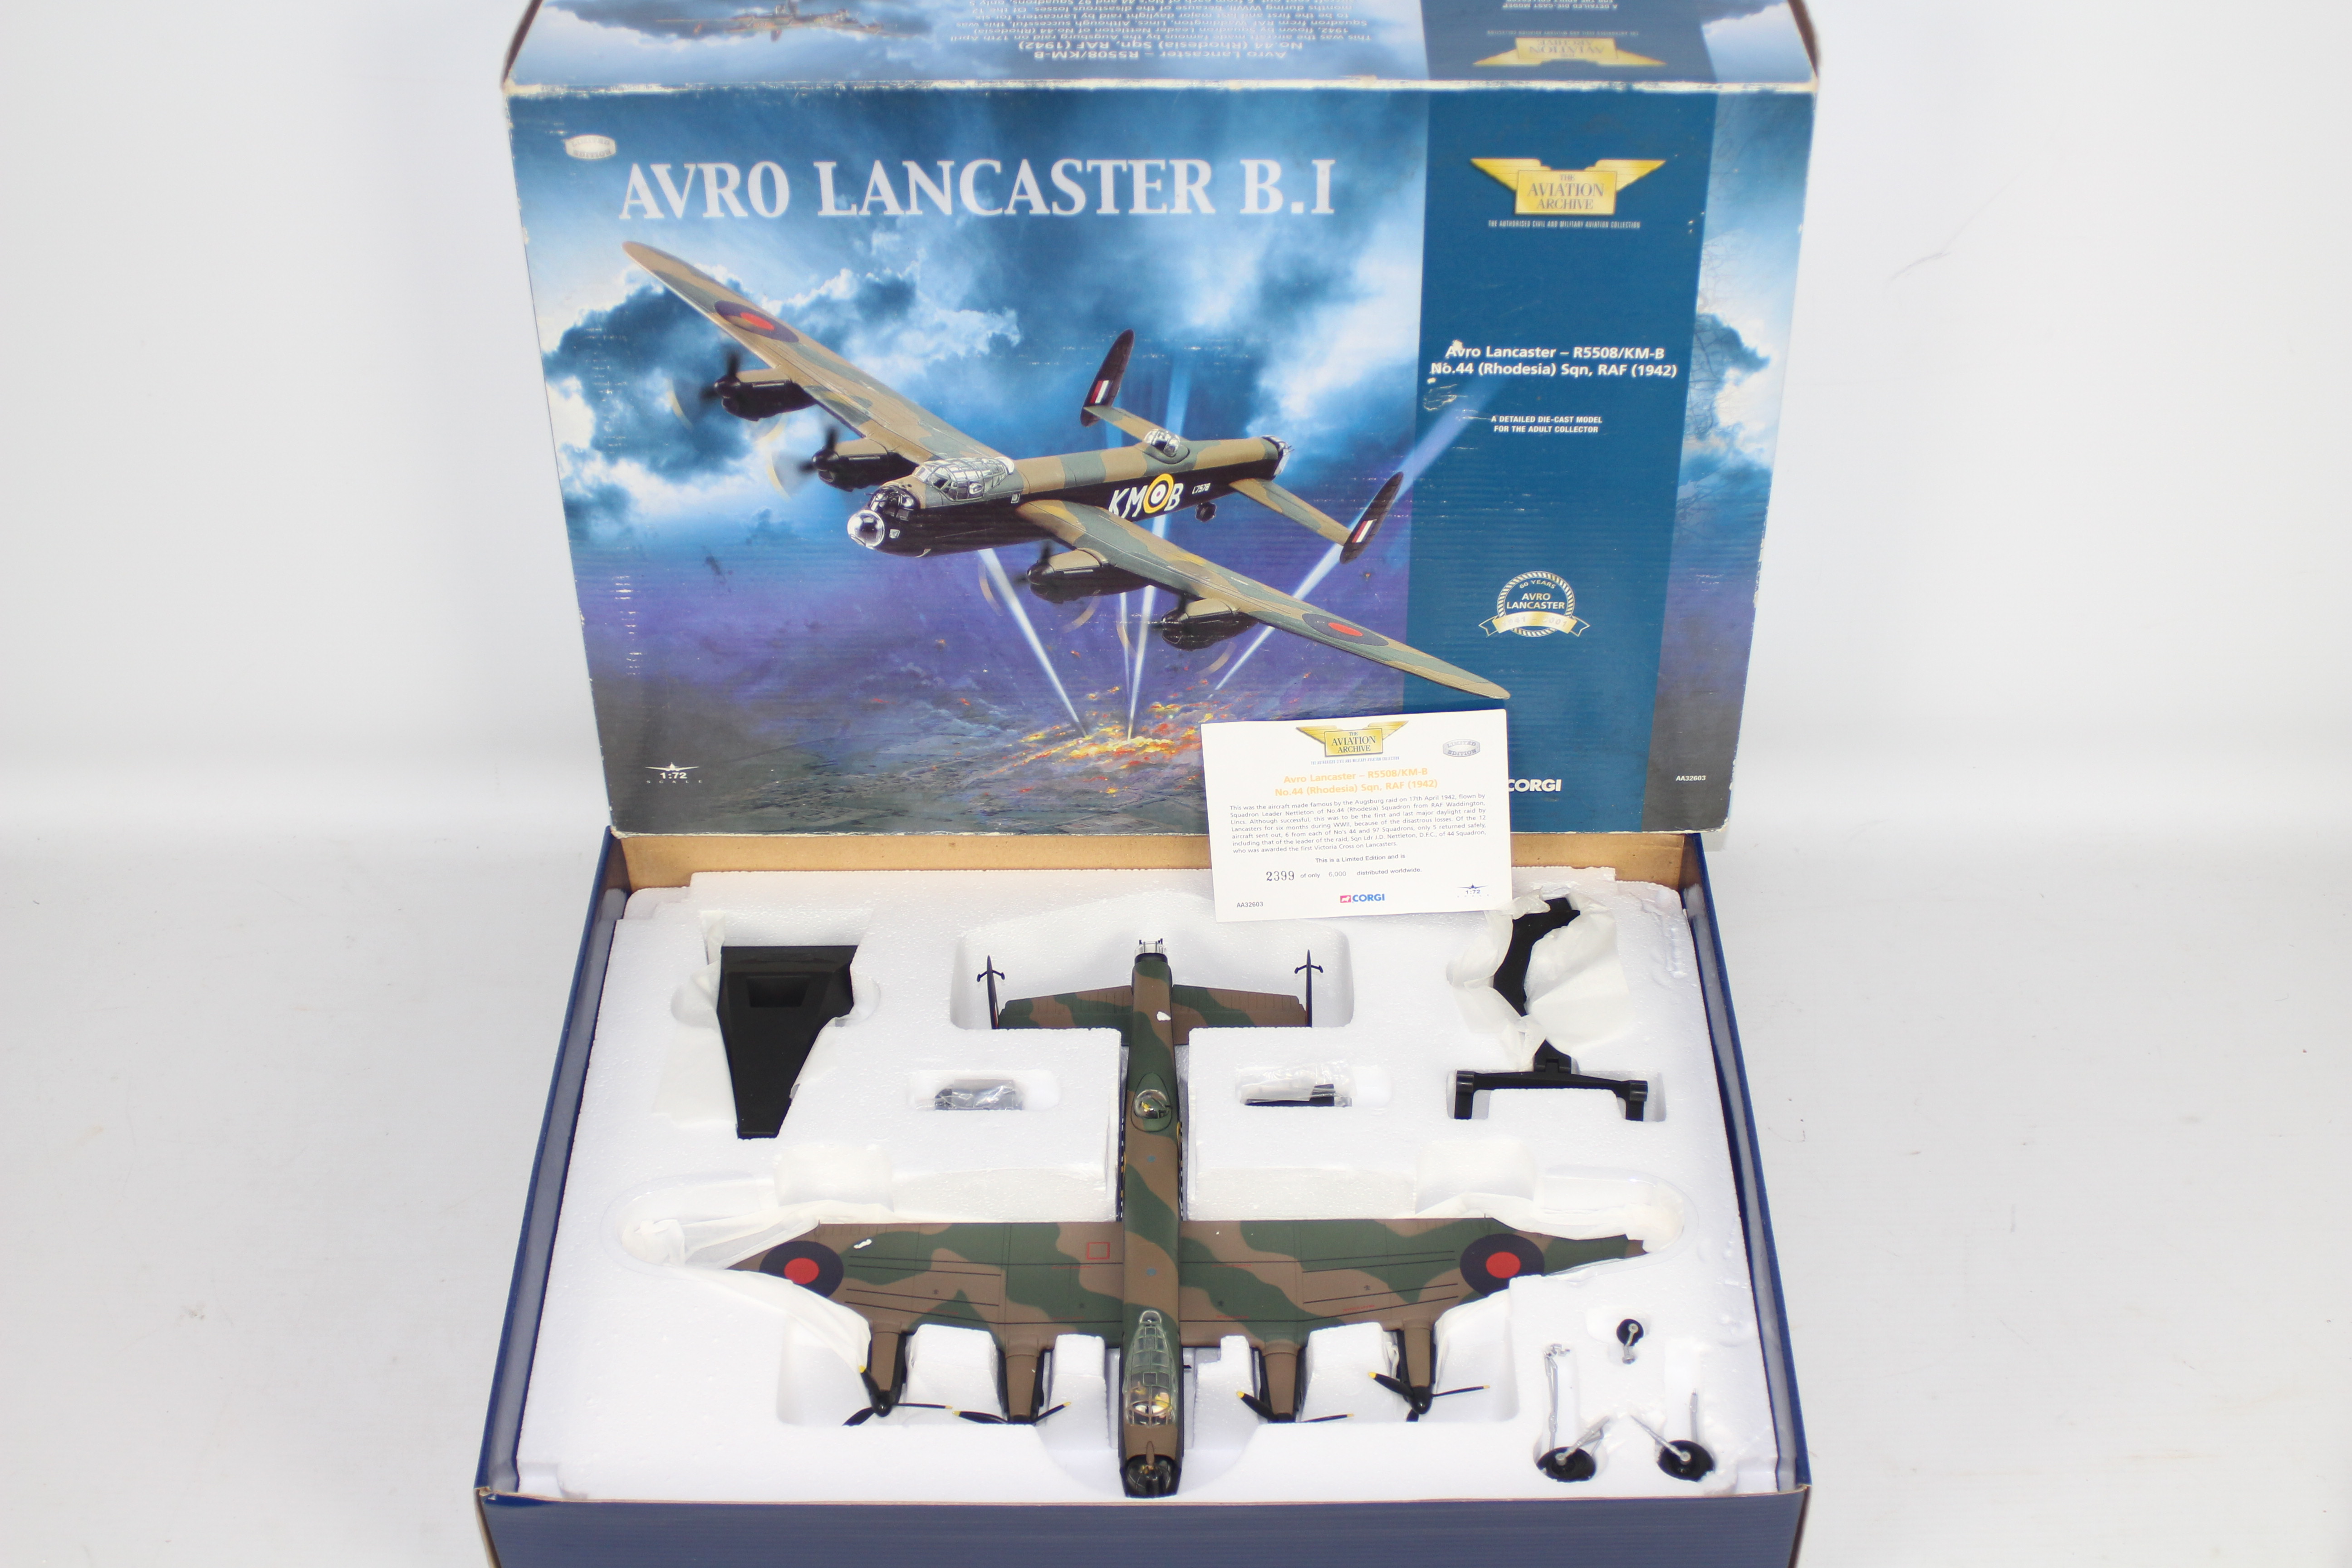 Corgi Aviation Archive - A boxed limited edition 1:72 scale AA32603 AVRO Lancaster R5508/KM-8 No.